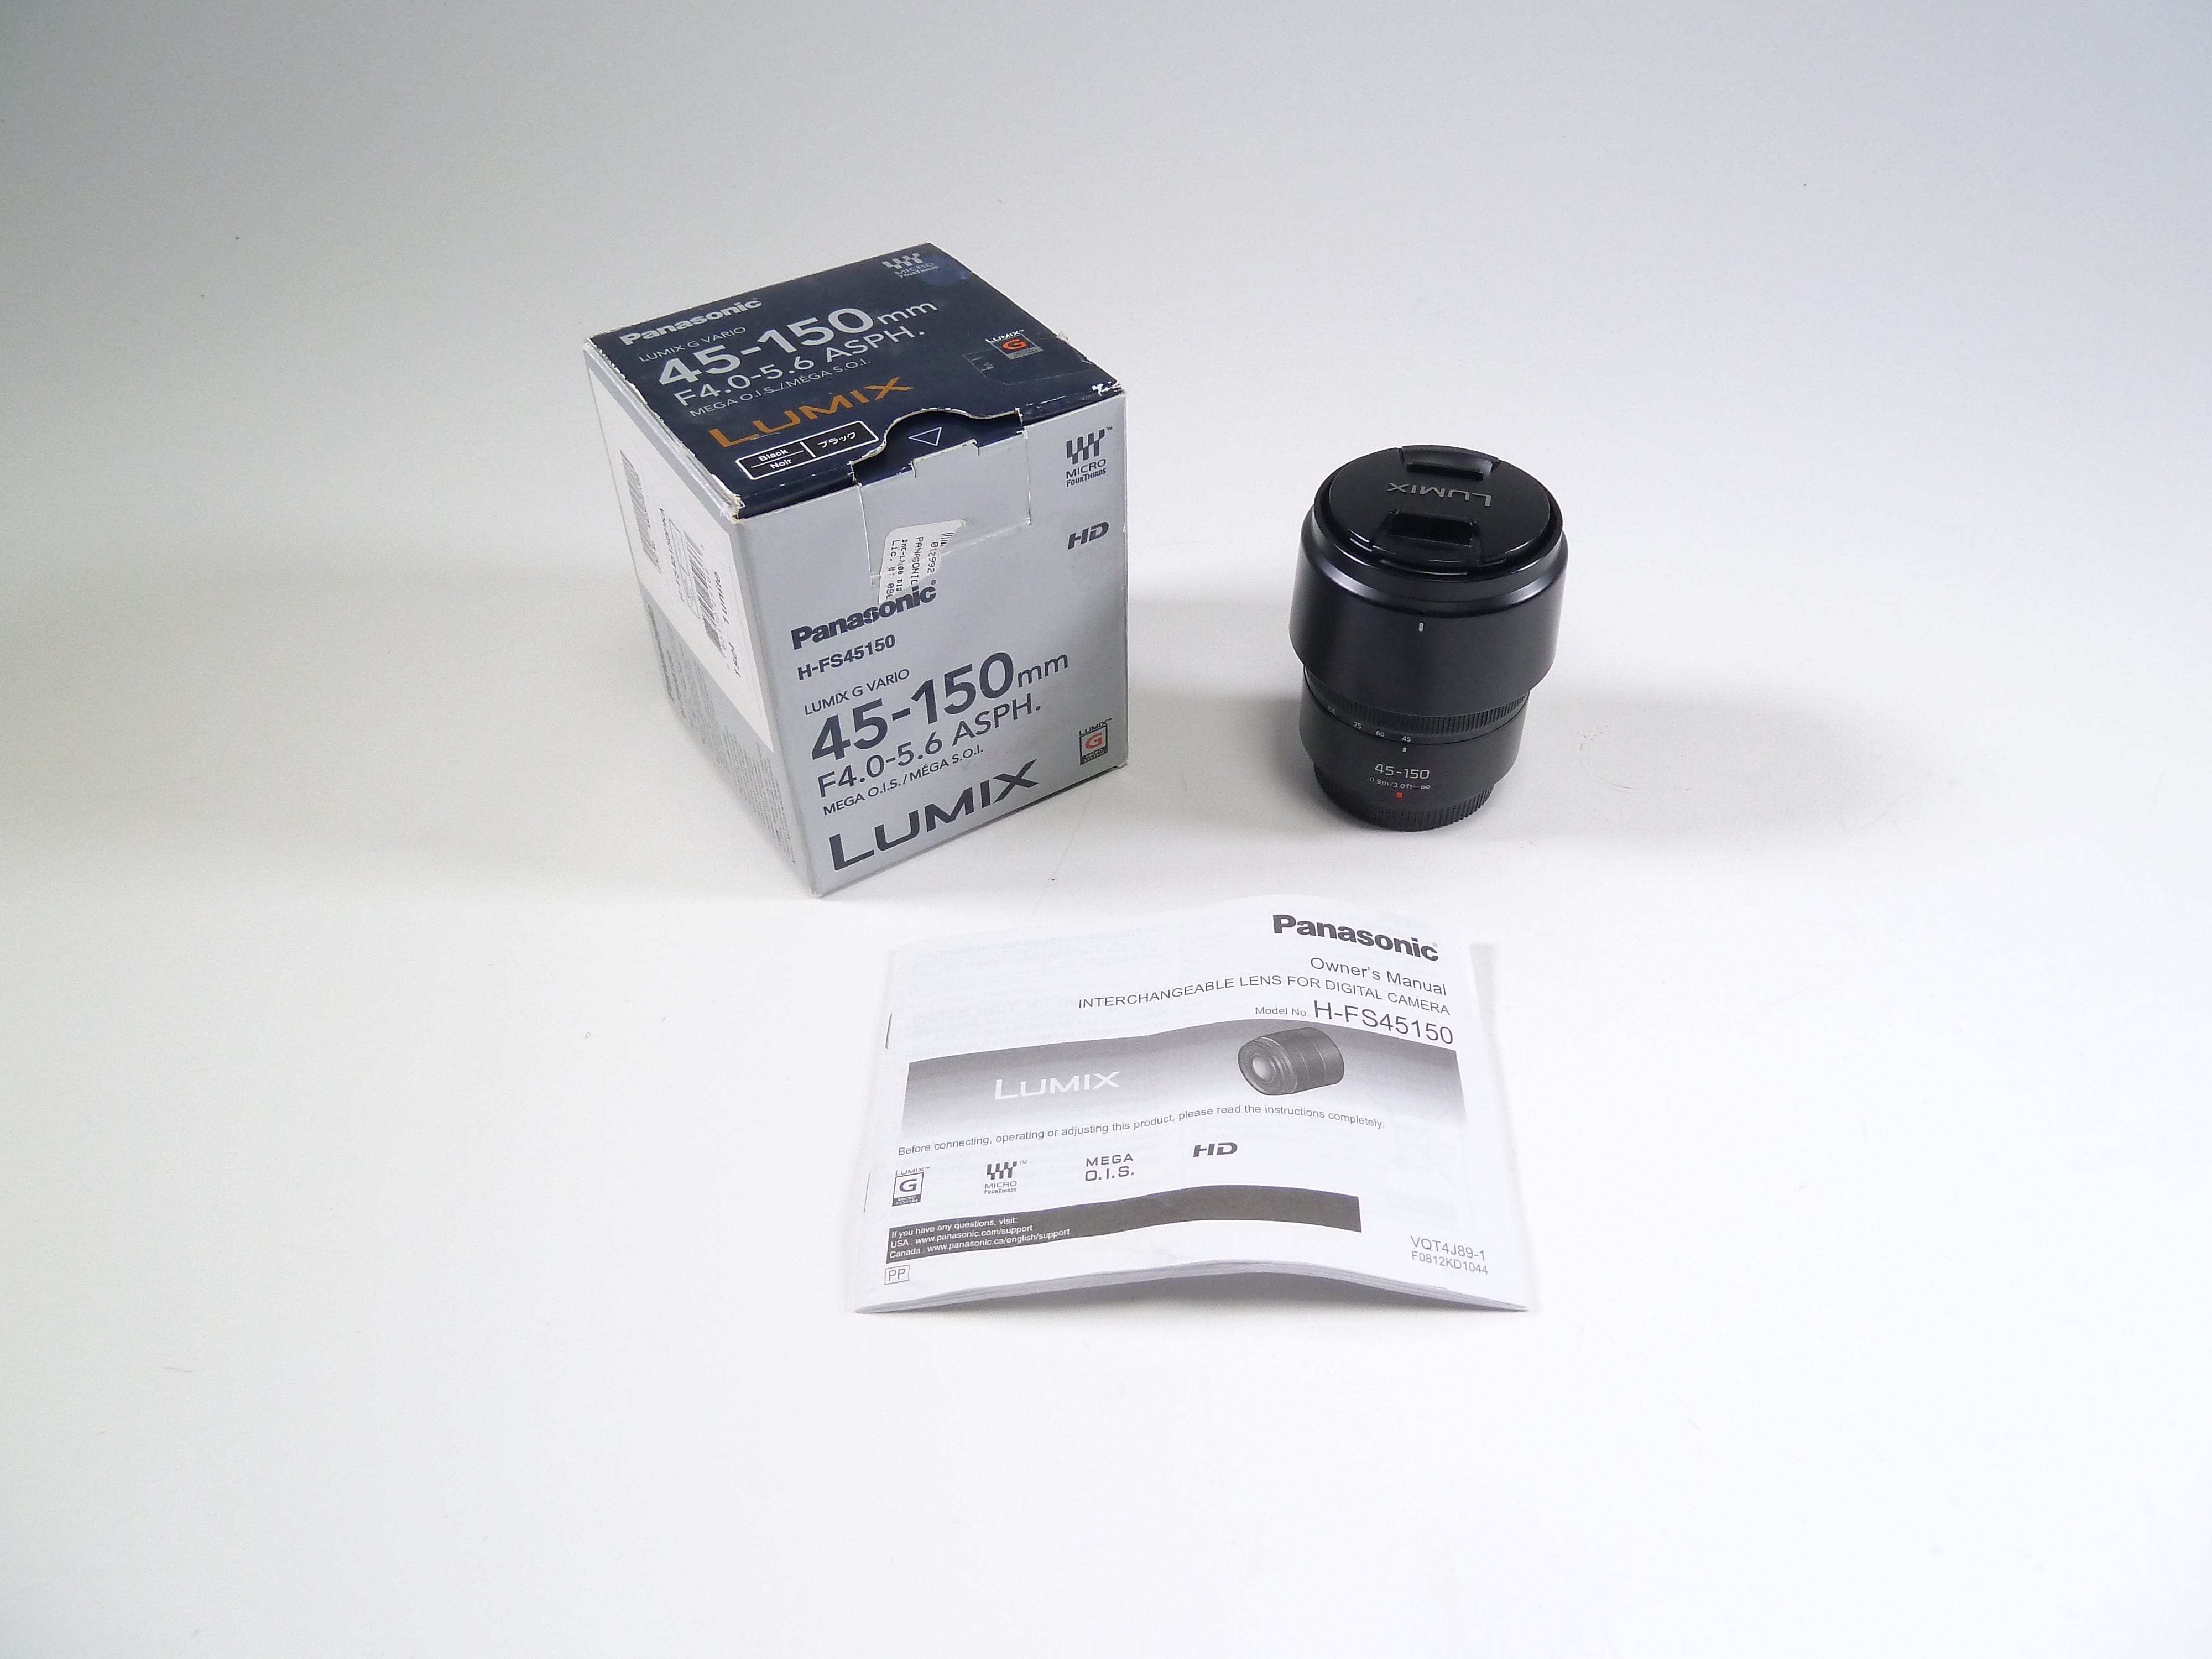 LUMIX G VARIO 45-150mm/F4.0-5.6 ASPH - レンズ(ズーム)